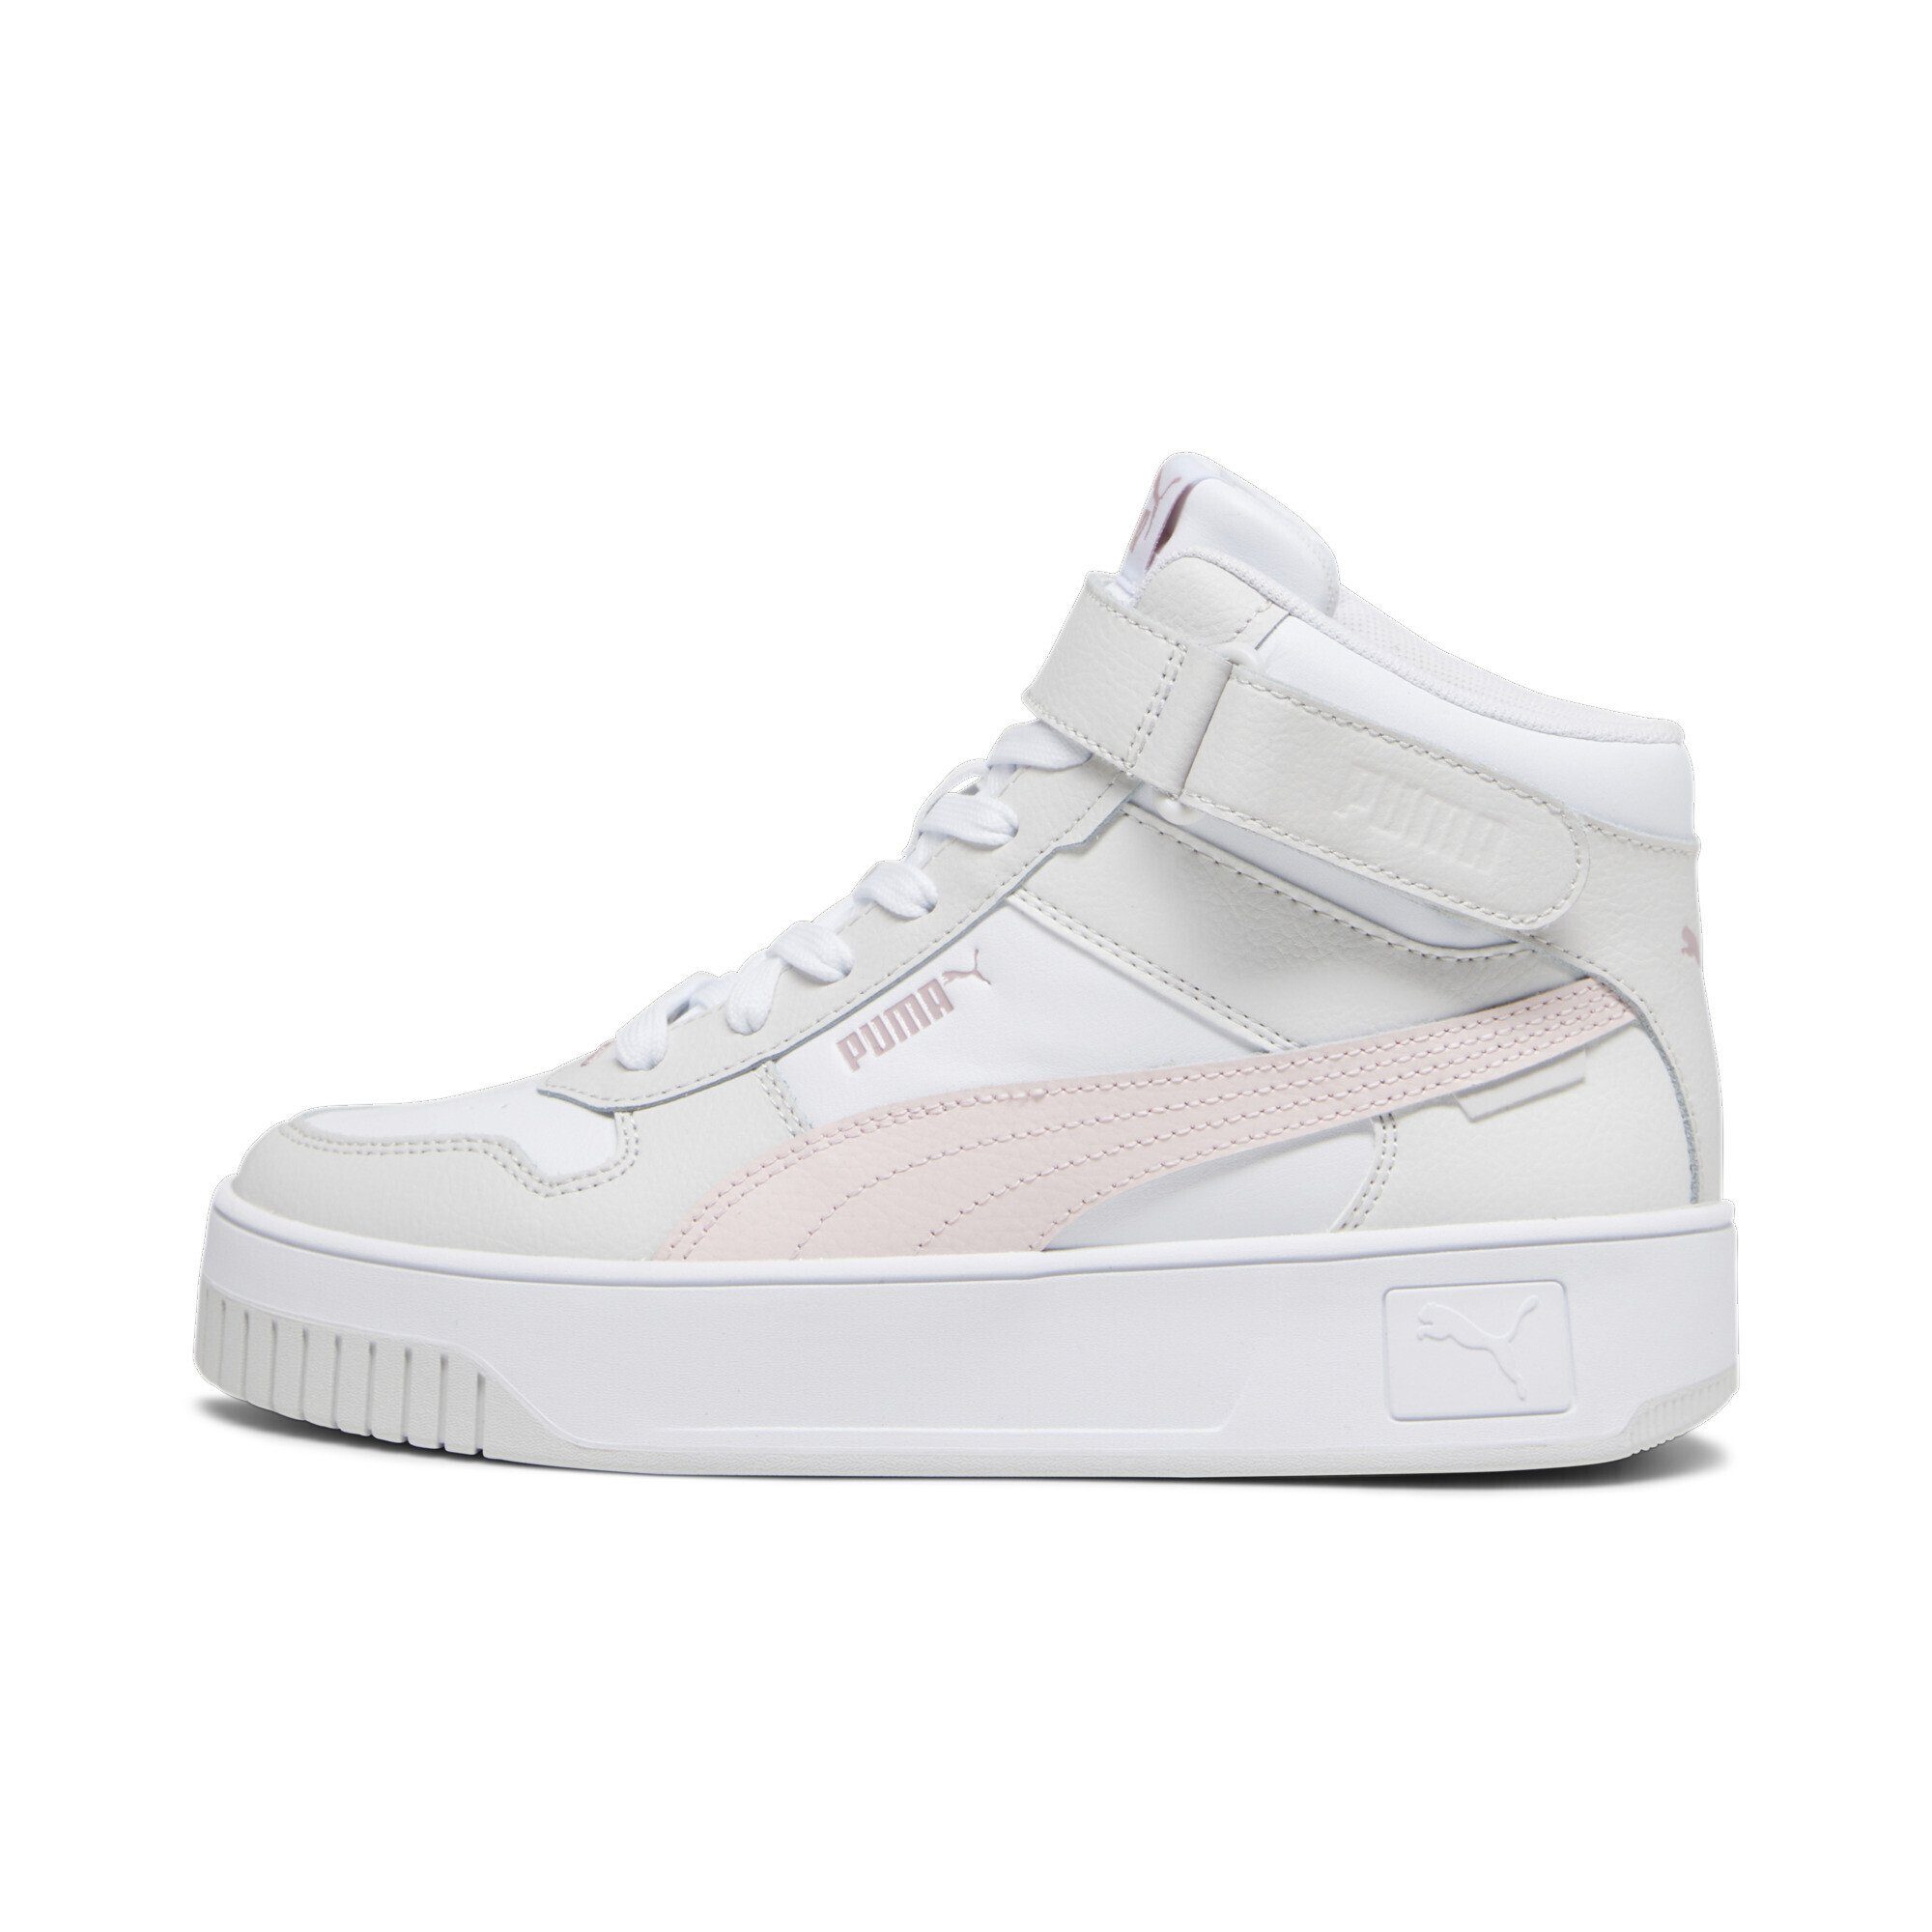 PUMA Carina Street Mid Sneakers Sneaker White Pink Frosty Damen Feather Gray